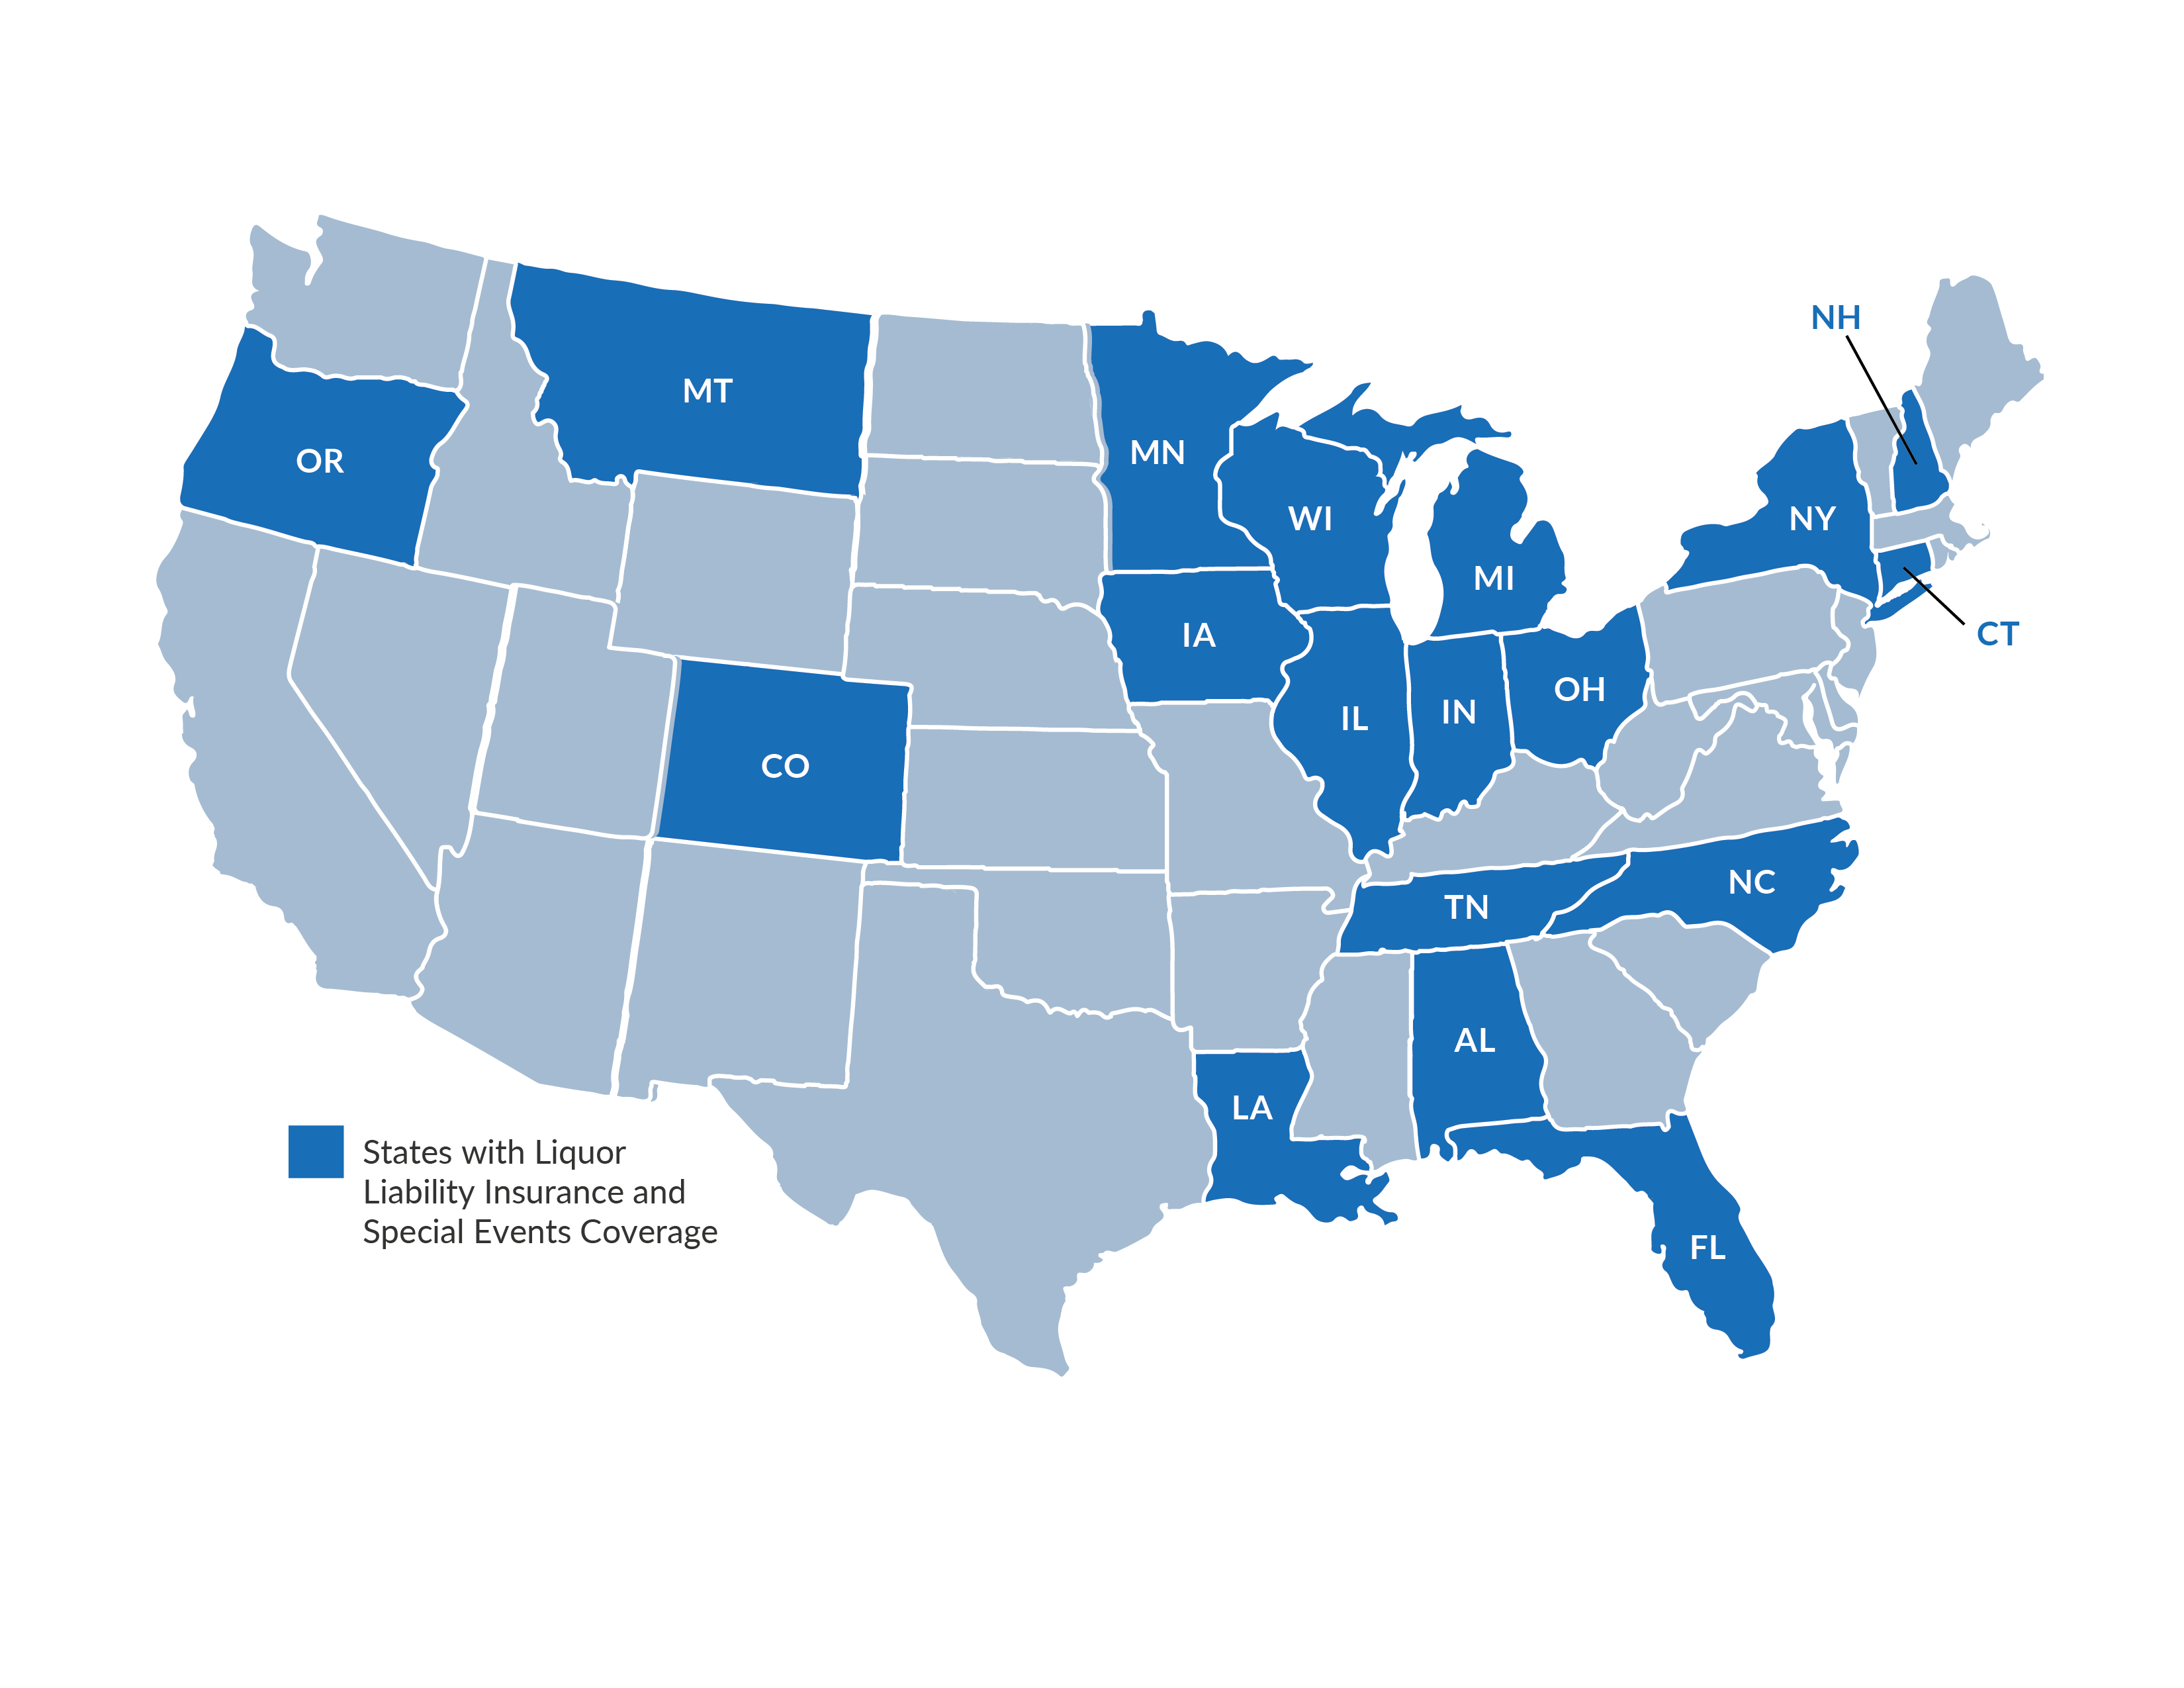 States with Liquor Liability Insurance and Special Events Coverage - NH,  CT, NY, NC, TN, AL, FL, LA, OH, IN, IL, MI, WI, MN, IA, MT, CO, OR